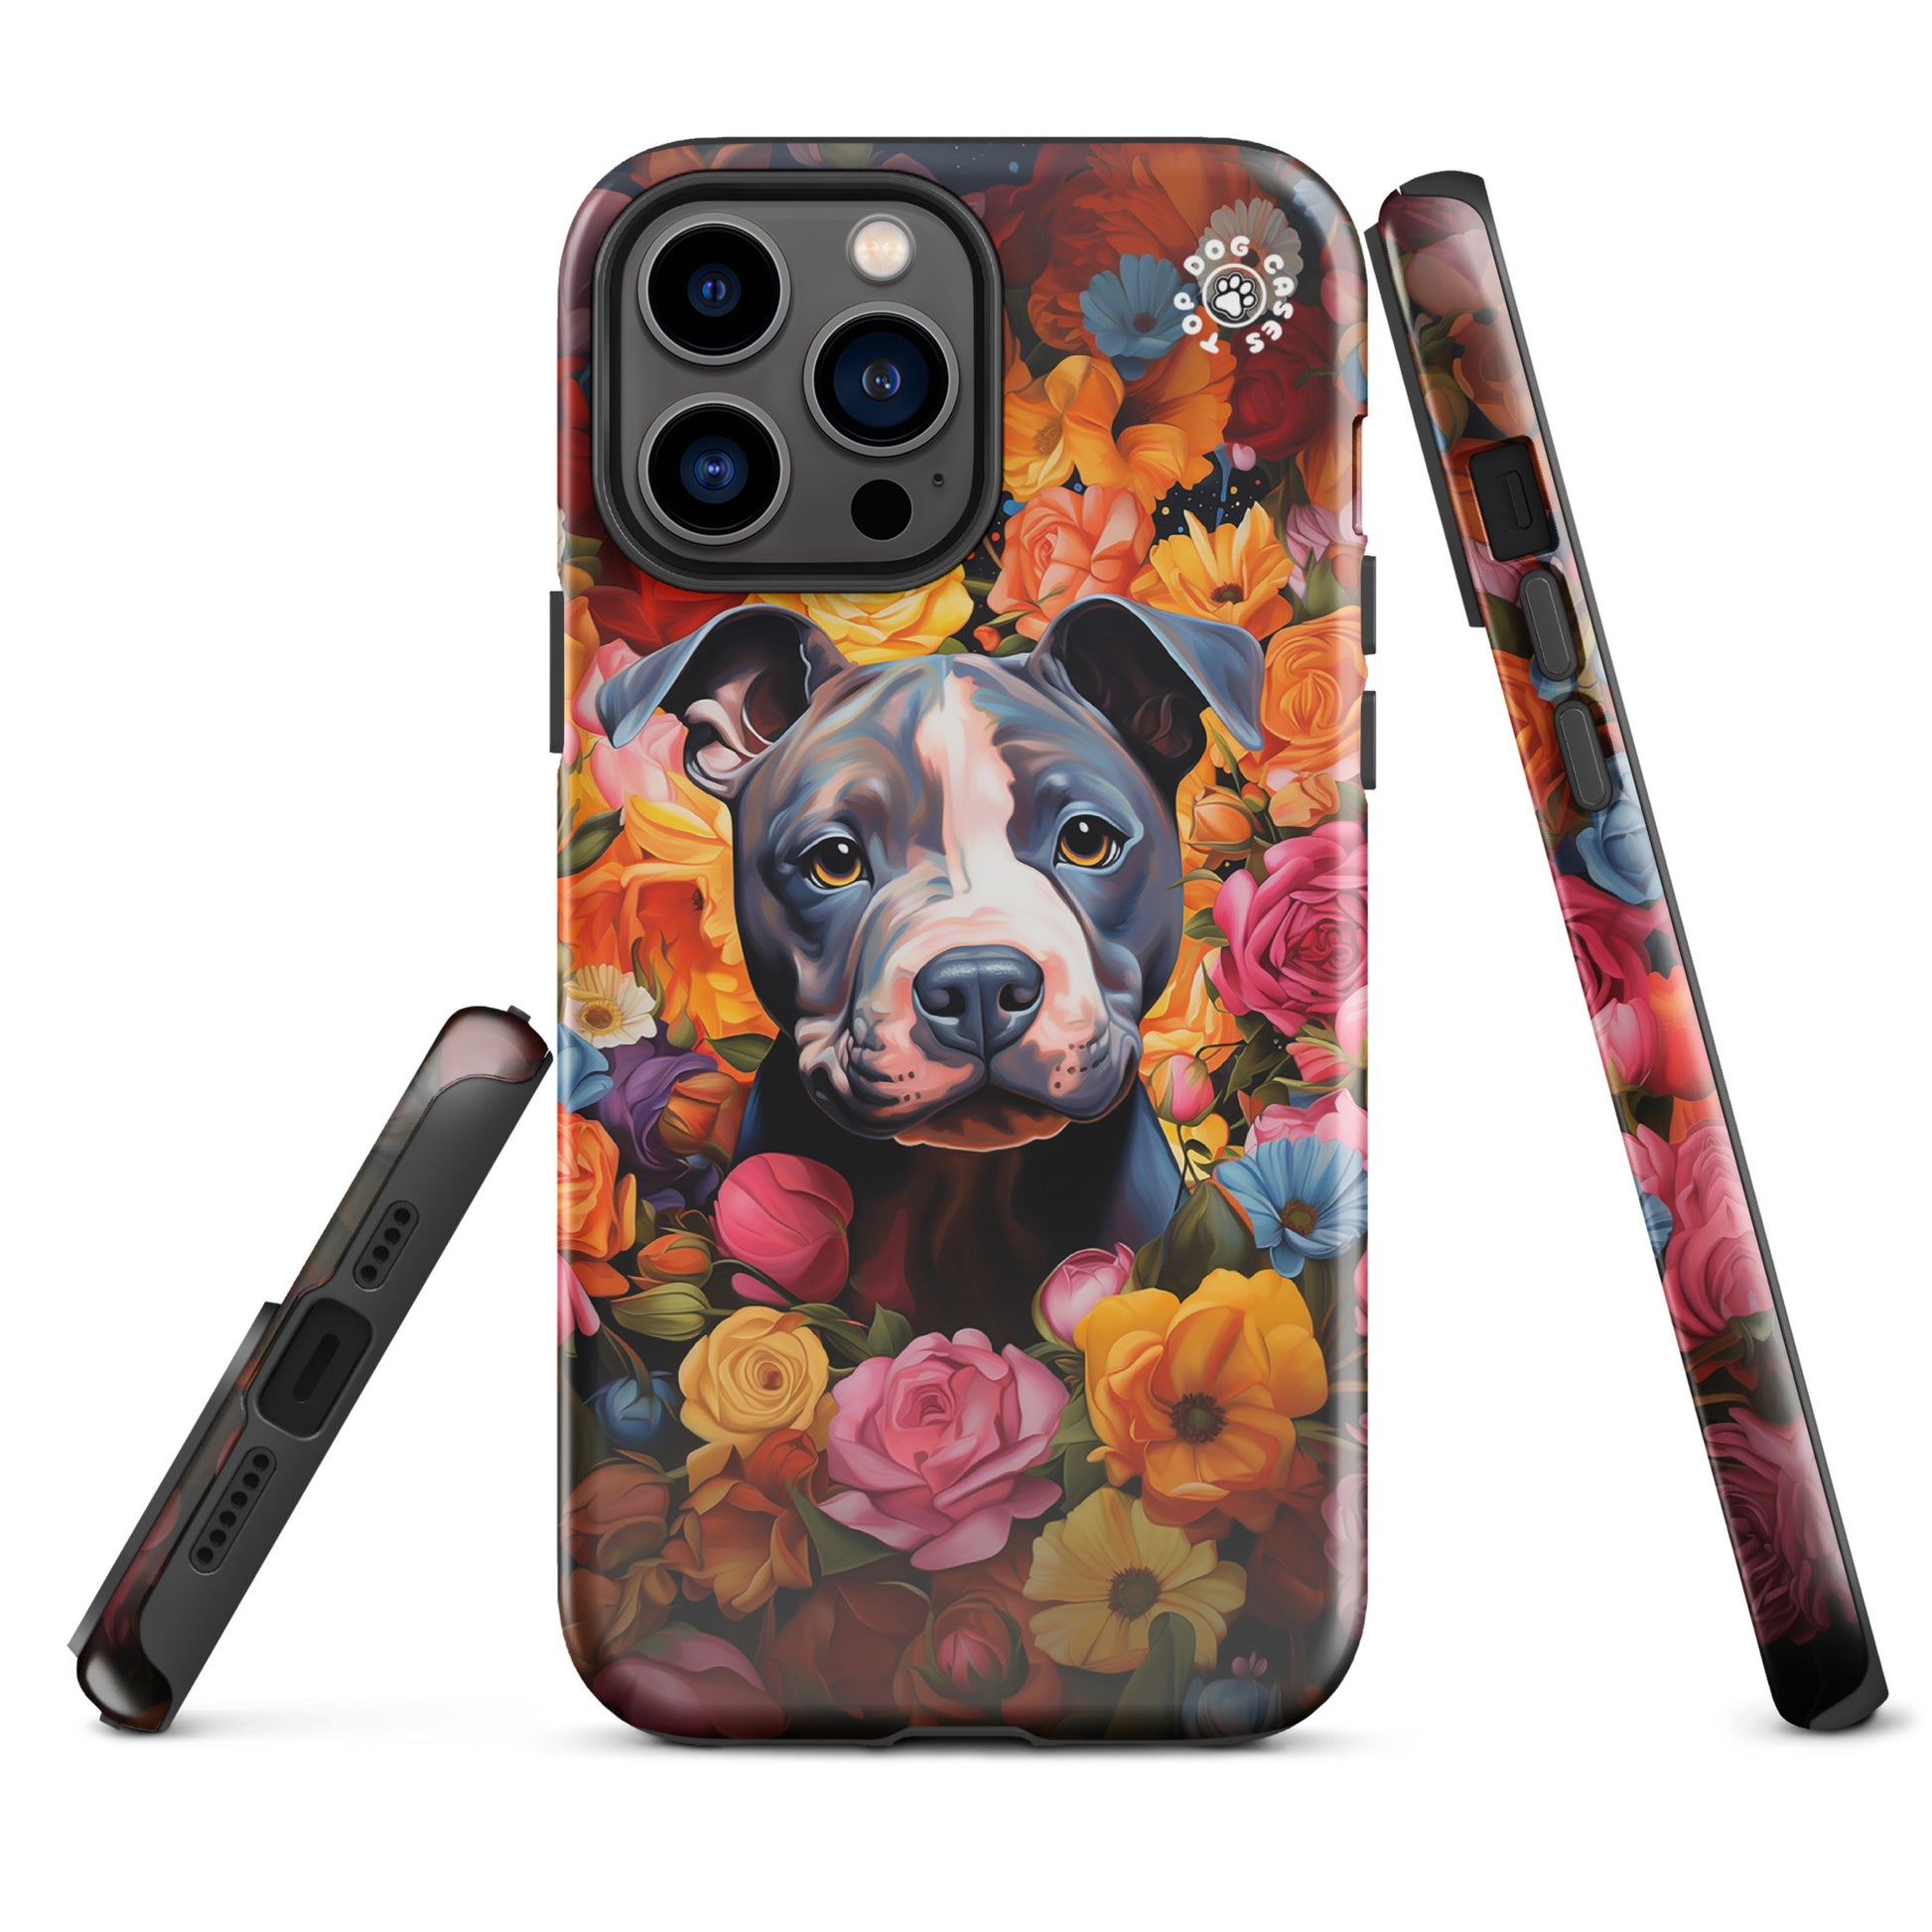 Pitbull - iPhone 13 Case - Aesthetic Phone Cases - Top Dog Cases - #DogsAndFlowers, #iPhone, #iPhone13, #iPhone13case, #iPhone13DogCase, #iPhone13Mini, #iPhone13Pro, #iPhone13ProMax, #Pitbull